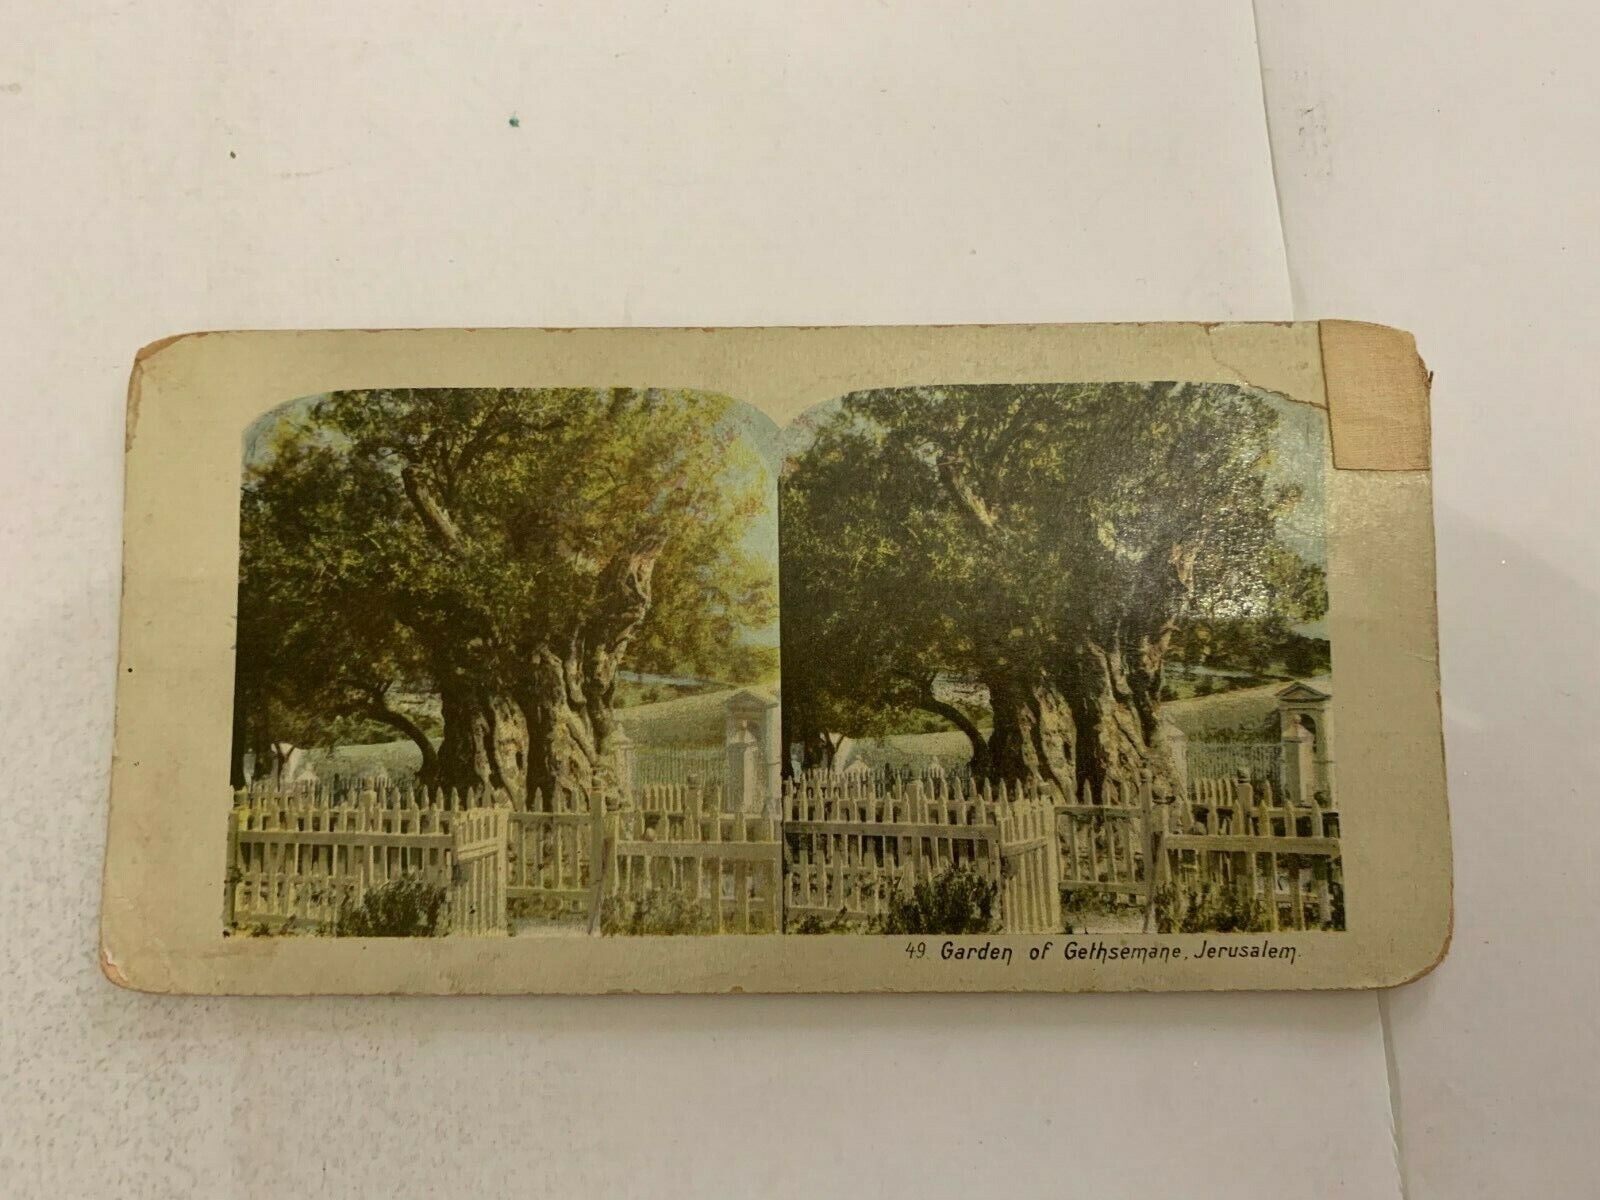 c.1910 Garden of Gethsemane Jerusalem Stereoview Card